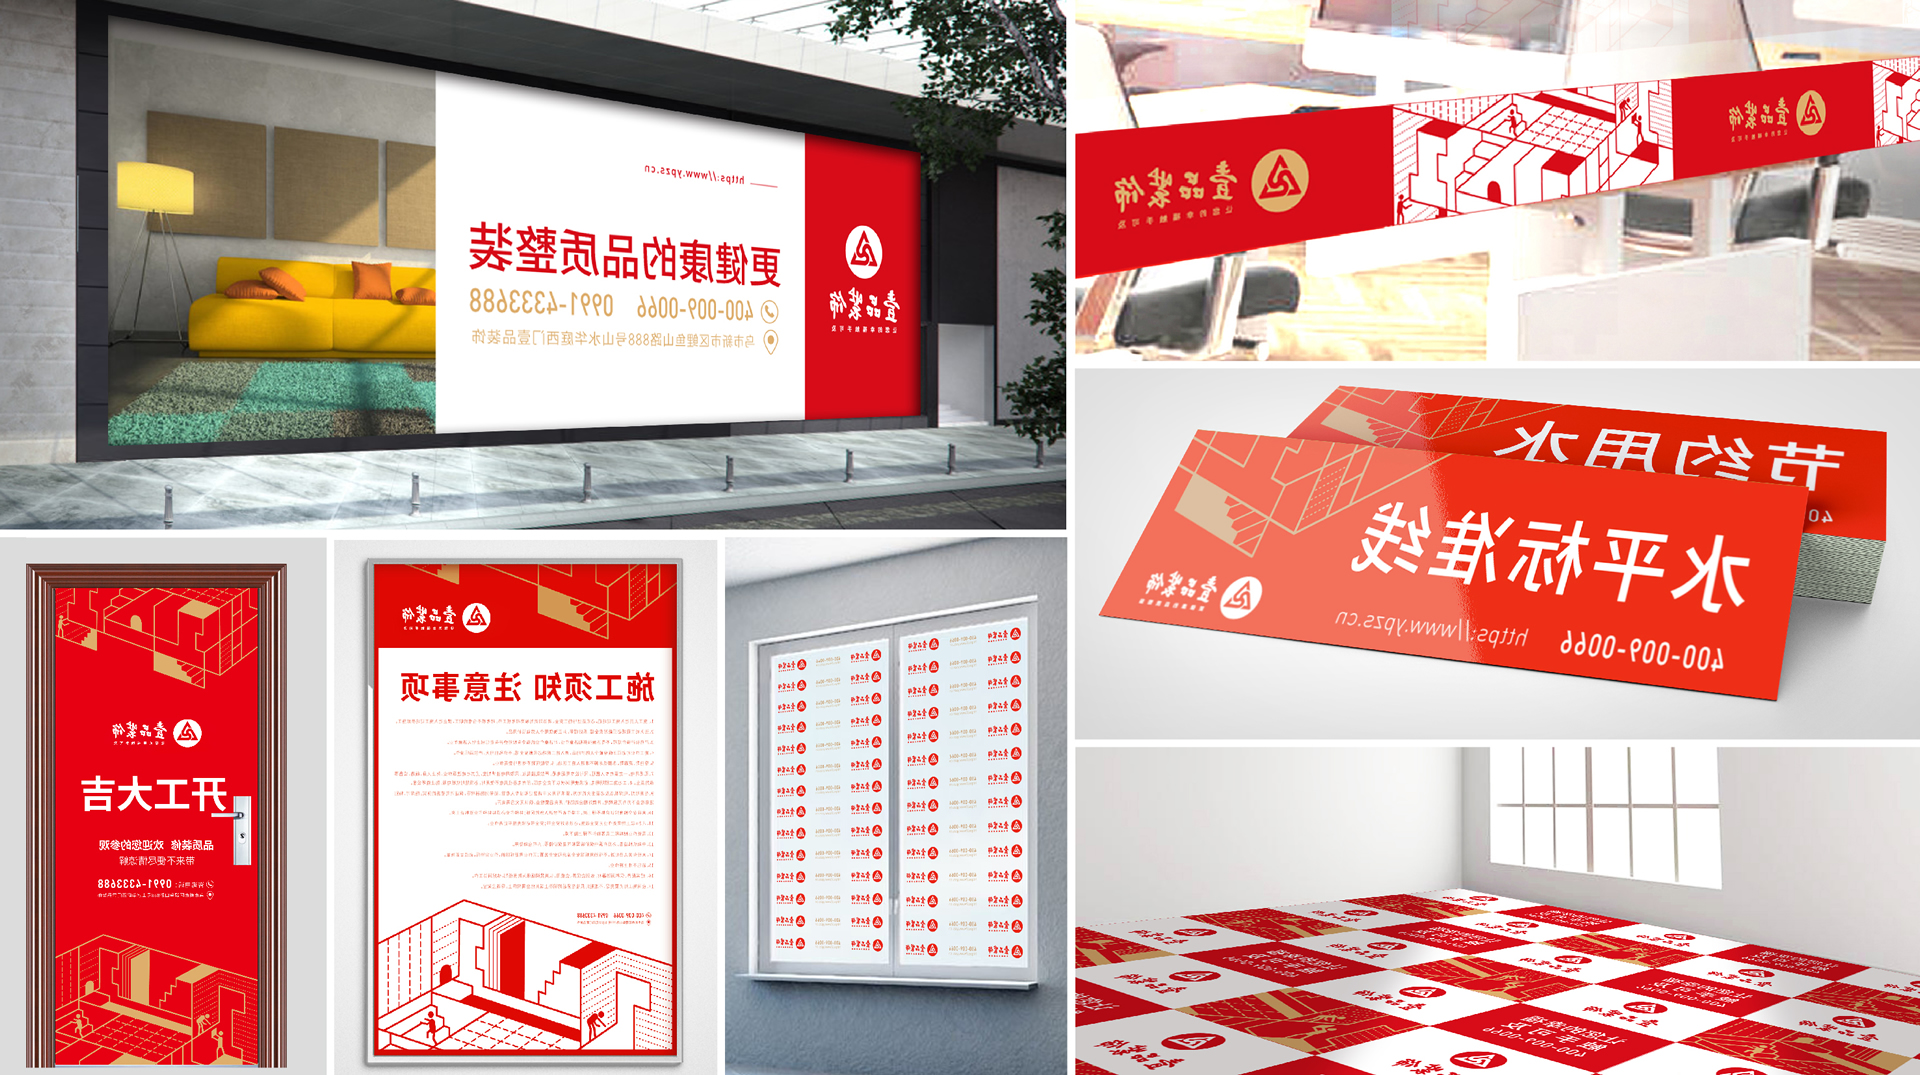 leyu-乐鱼全站app下载(中国)app store
案例-壹品装饰 | 大企业品牌形象升级的“破(图17)